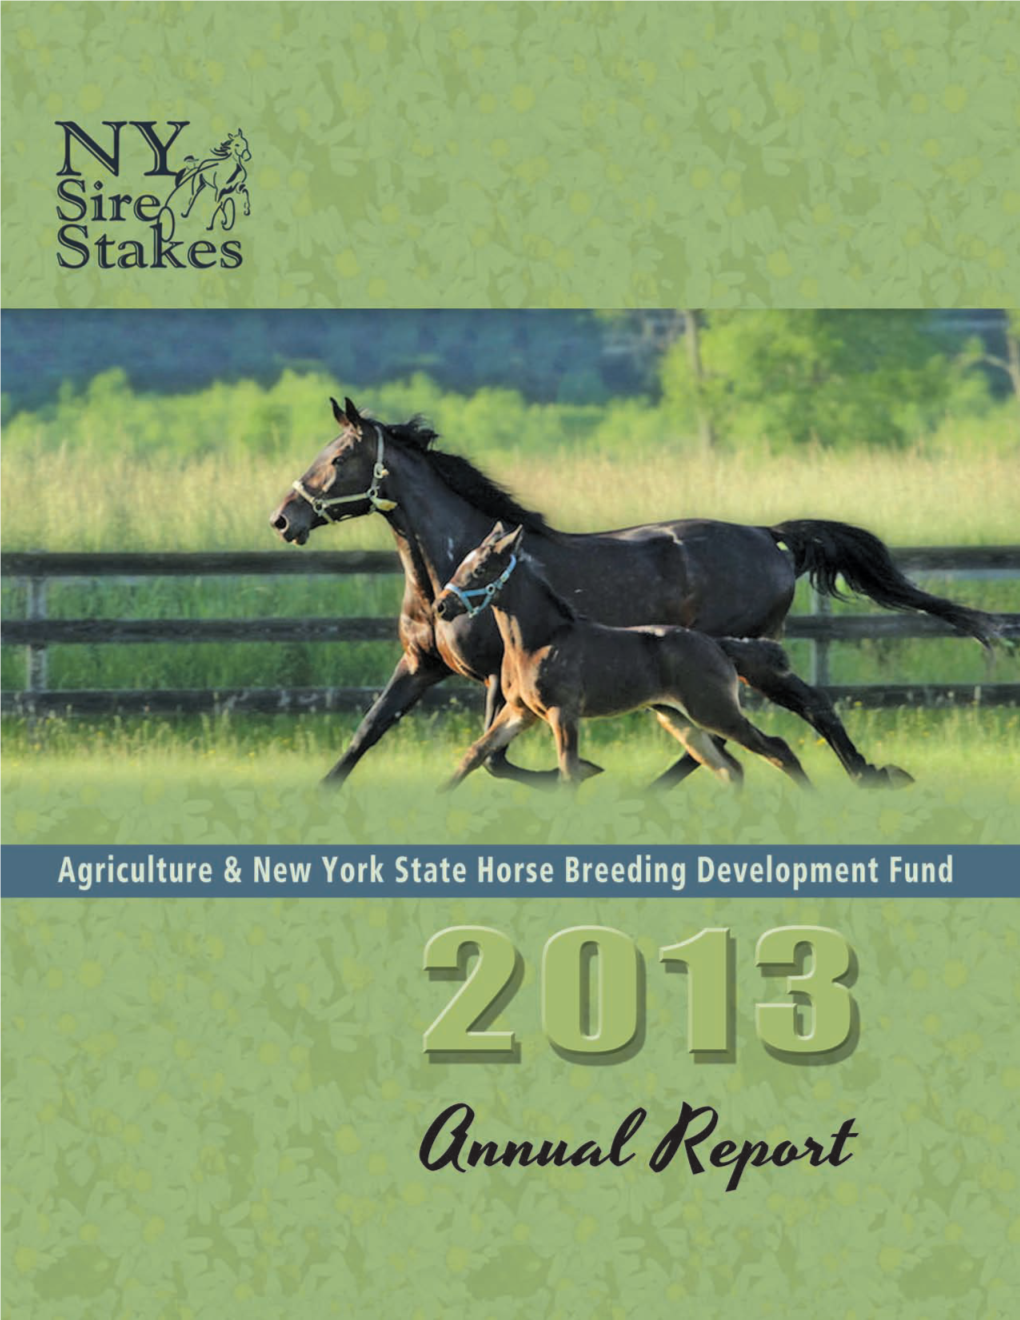 Agriculture & New York State Horse Breeding Development Fund